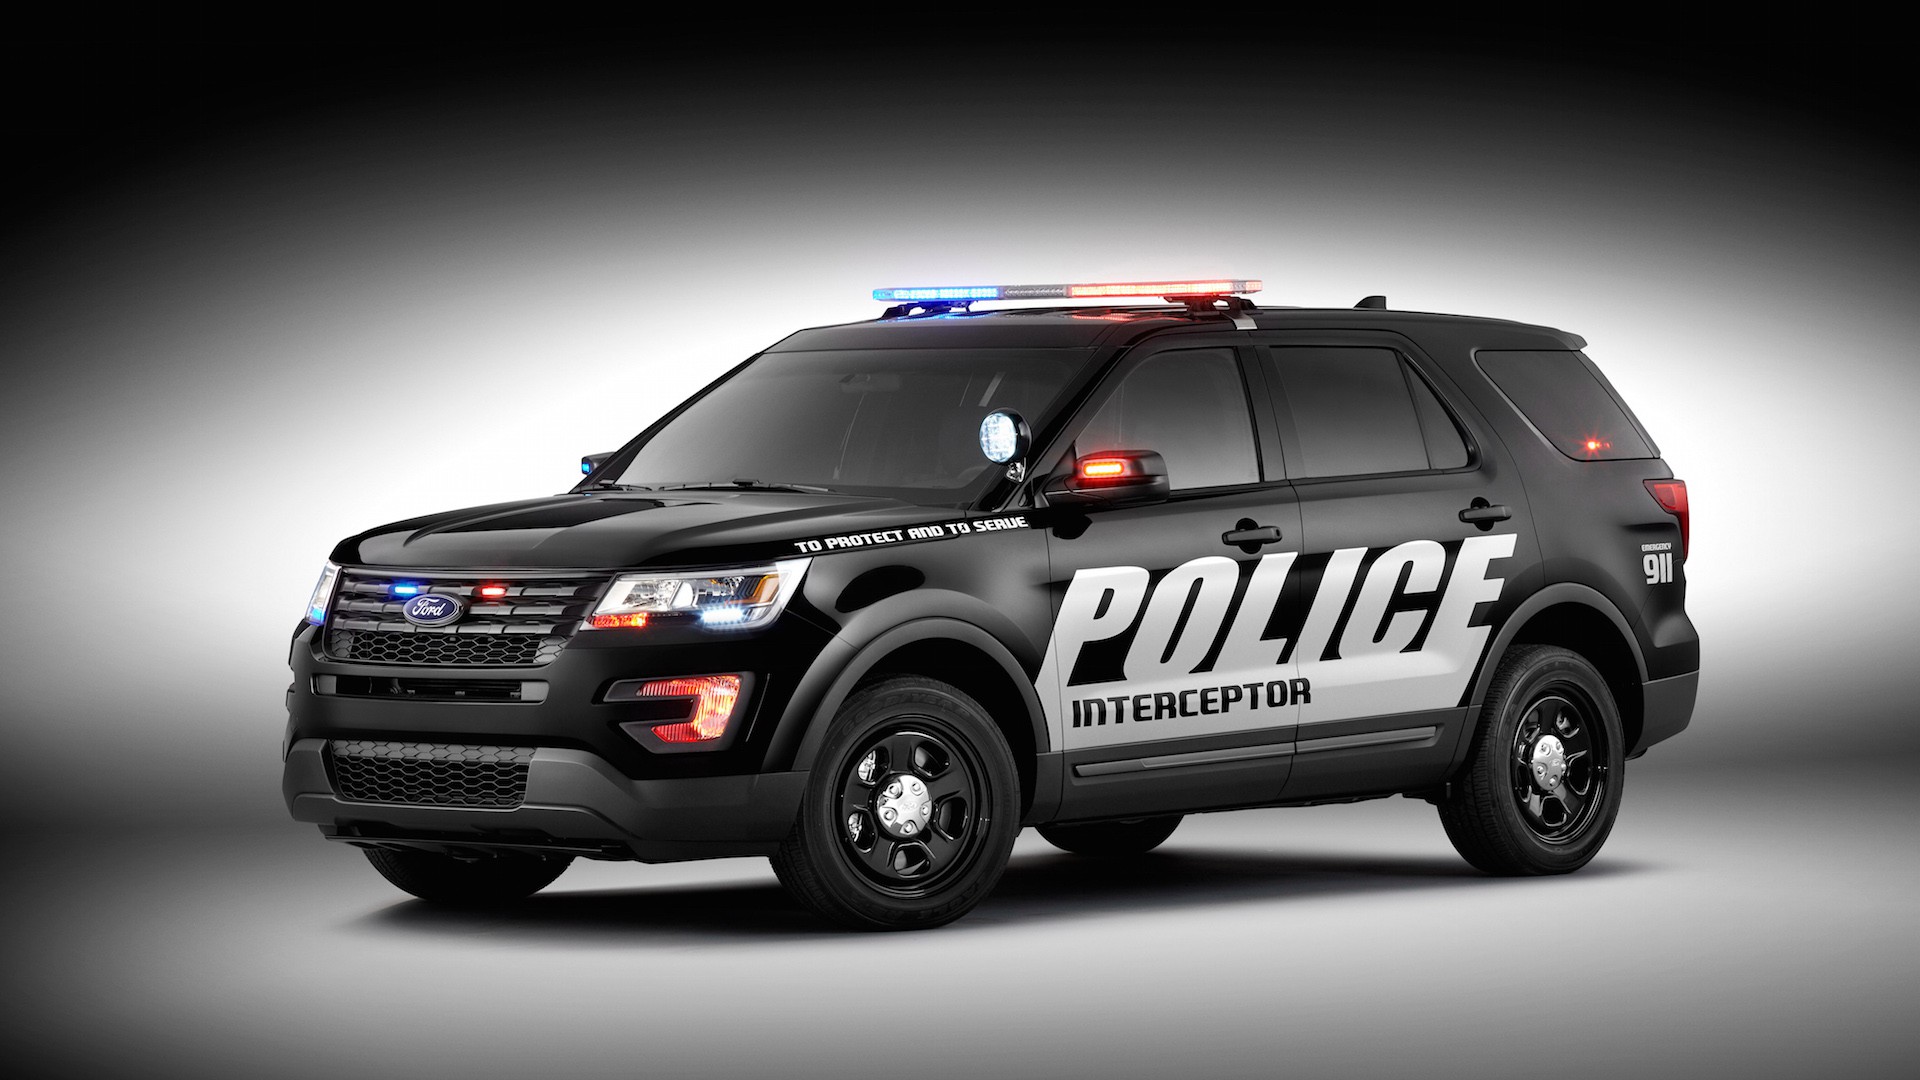 2016 Ford Police Interceptor Car Hd Wallpaper   2019 Ford Police